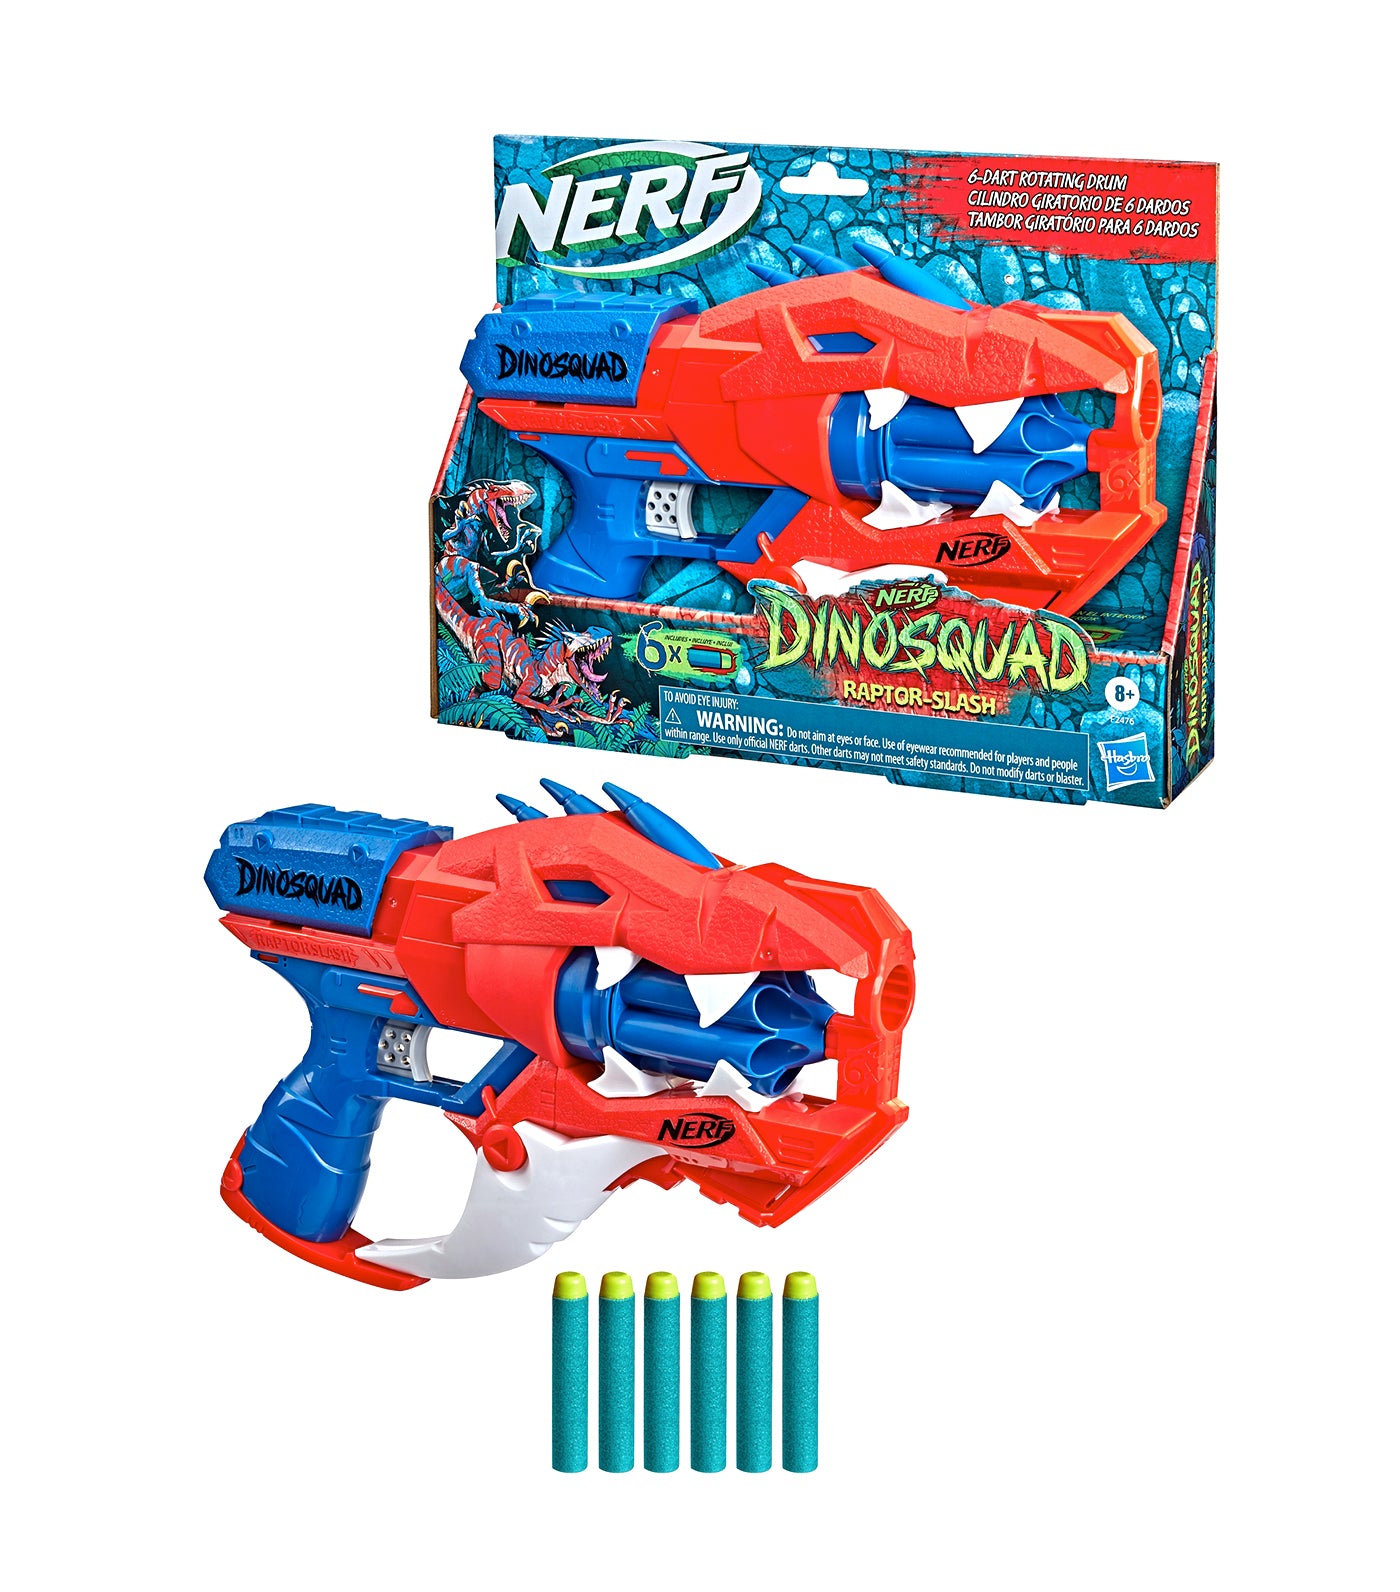 Nerf DinoSquad Terrodak, 12 Nerf Elite Darts, Dinosaur Design, 4 Dart Toy  Foam Nerf Blaster for Kids Outdoor Games